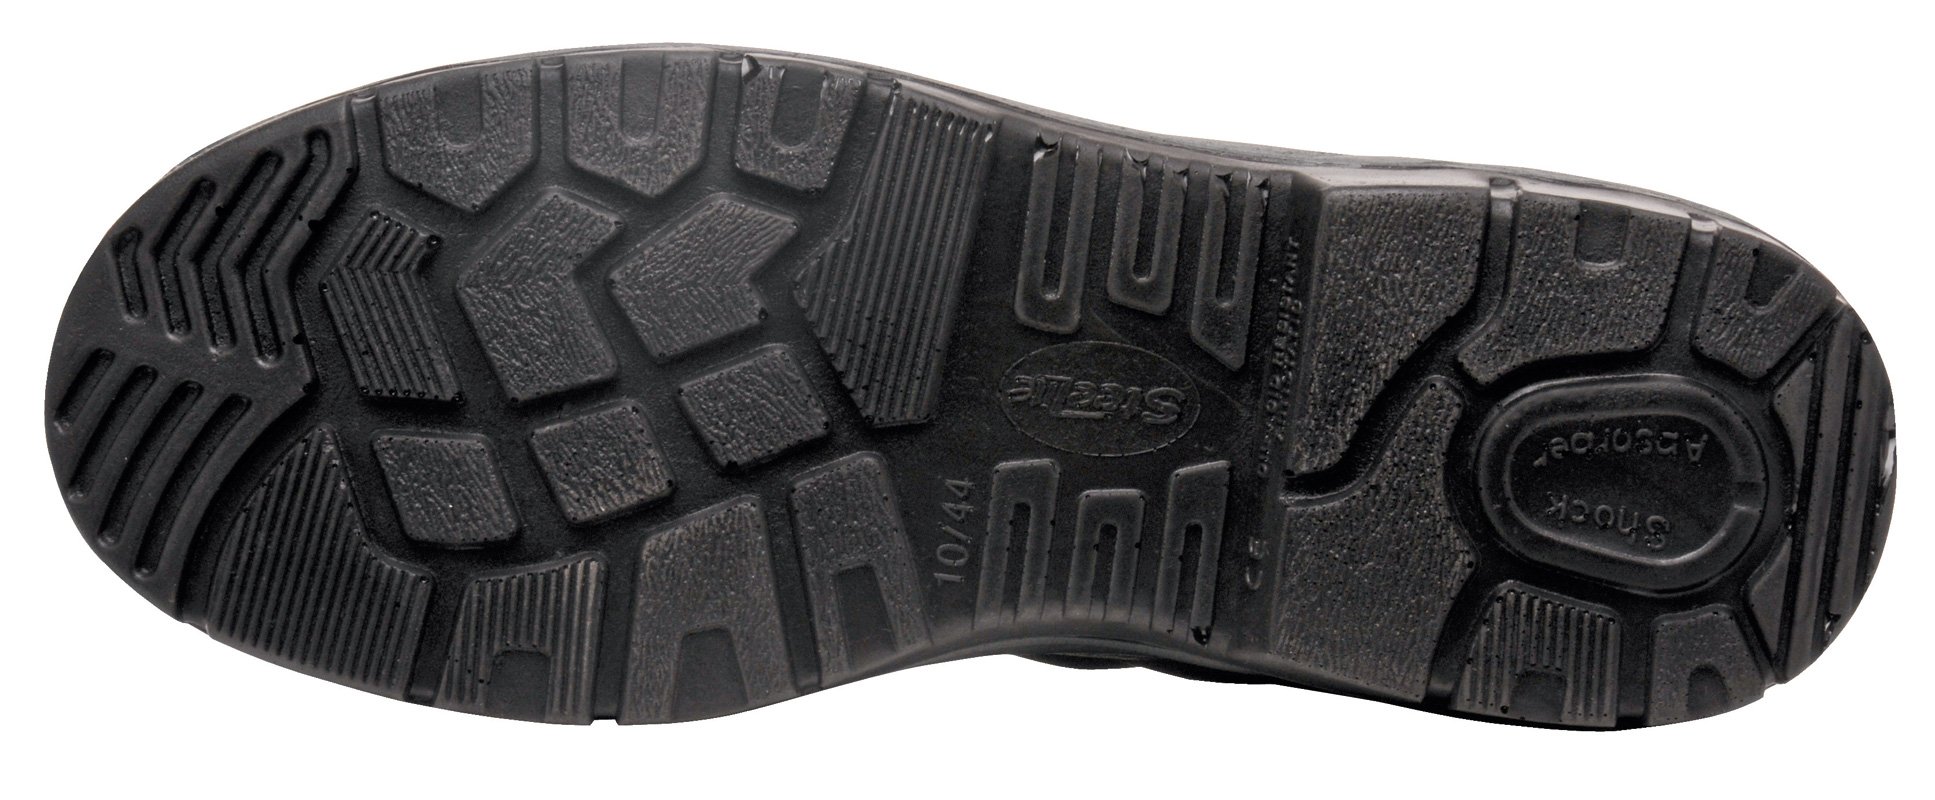 Portwest FW10 Comfort Slip Resistant Steelite Protector Safety Steel Toe Safety Boots S1P Black, 51